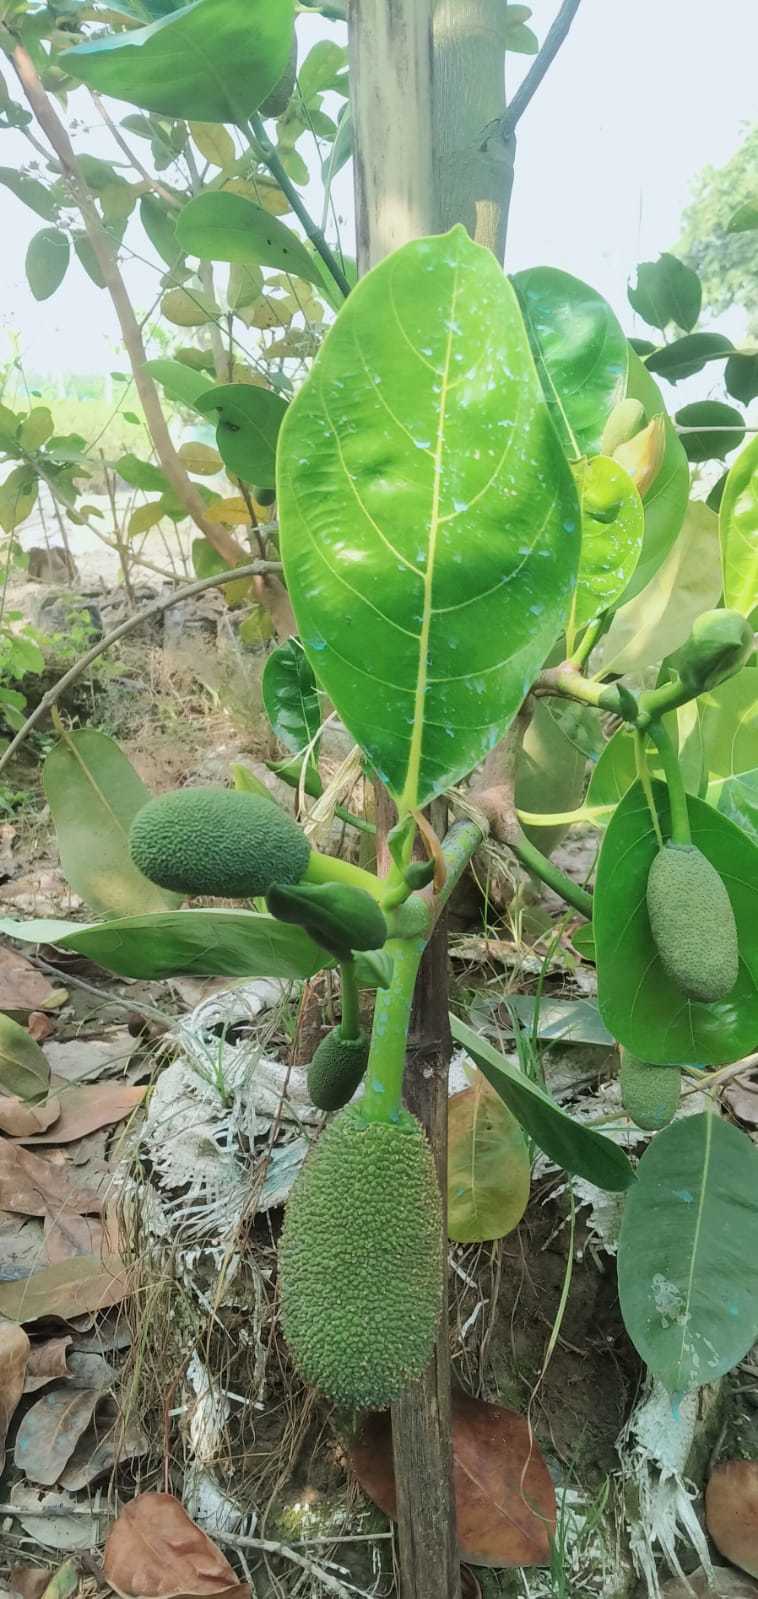 All time jackfruit plants